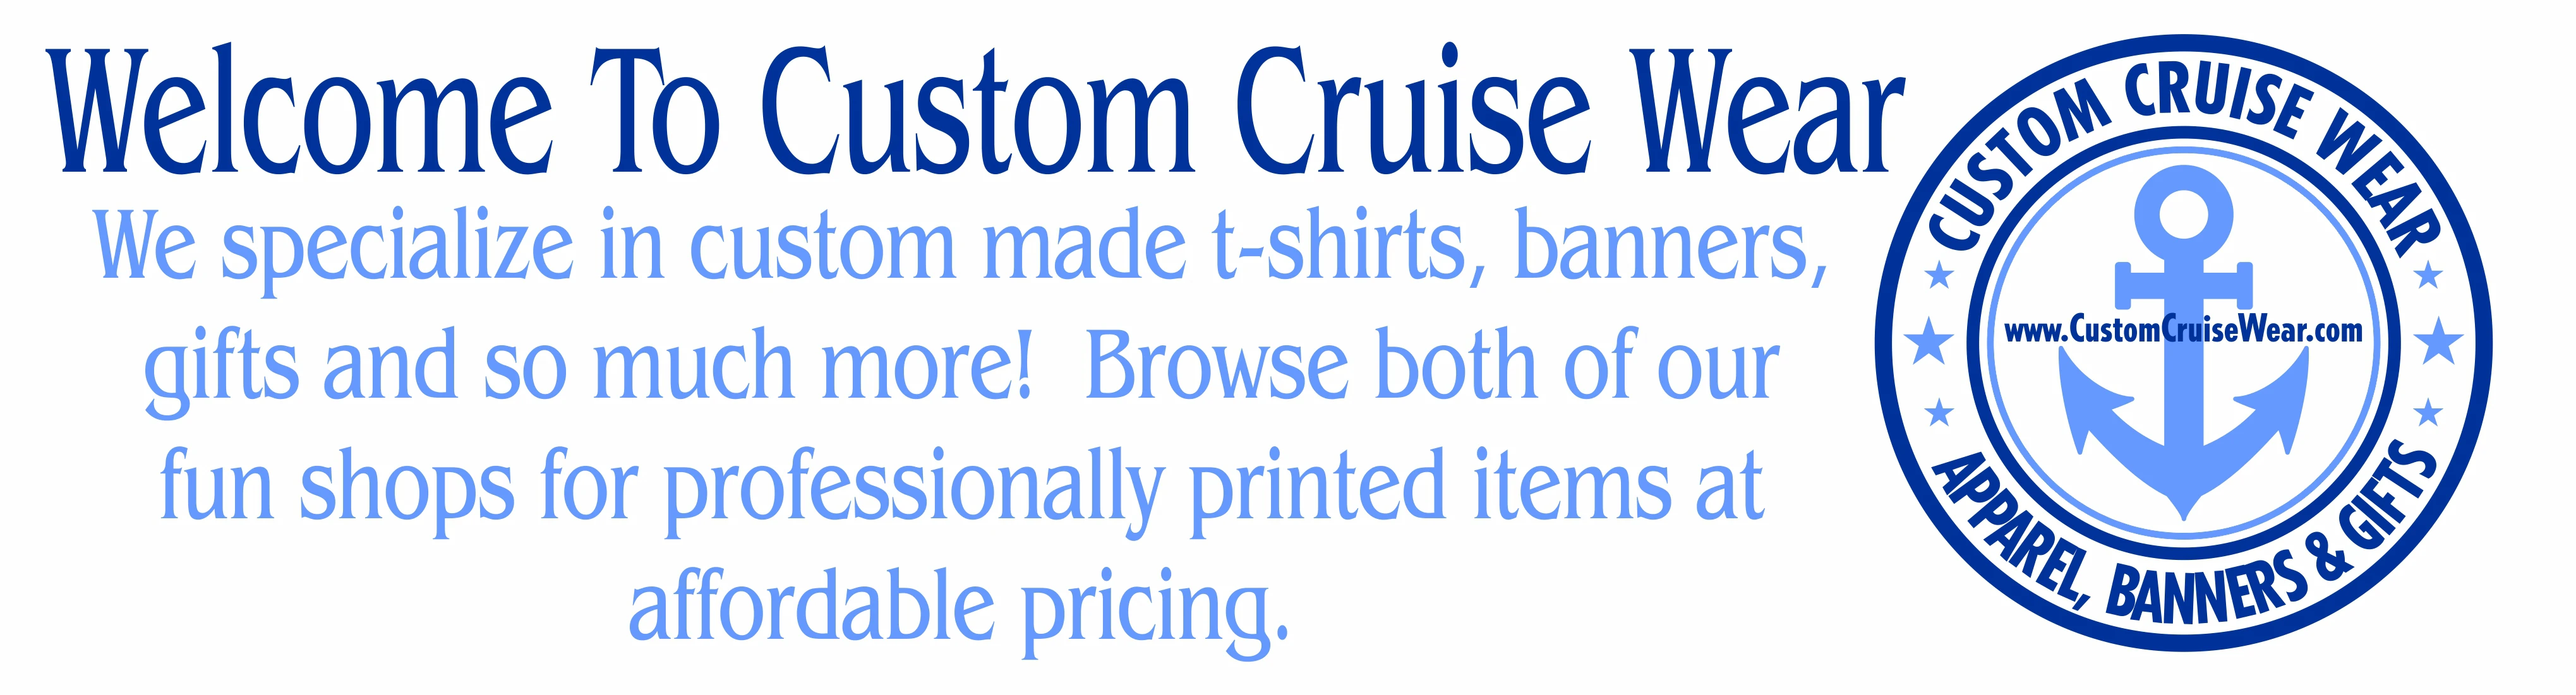 Custom Cruise Wear